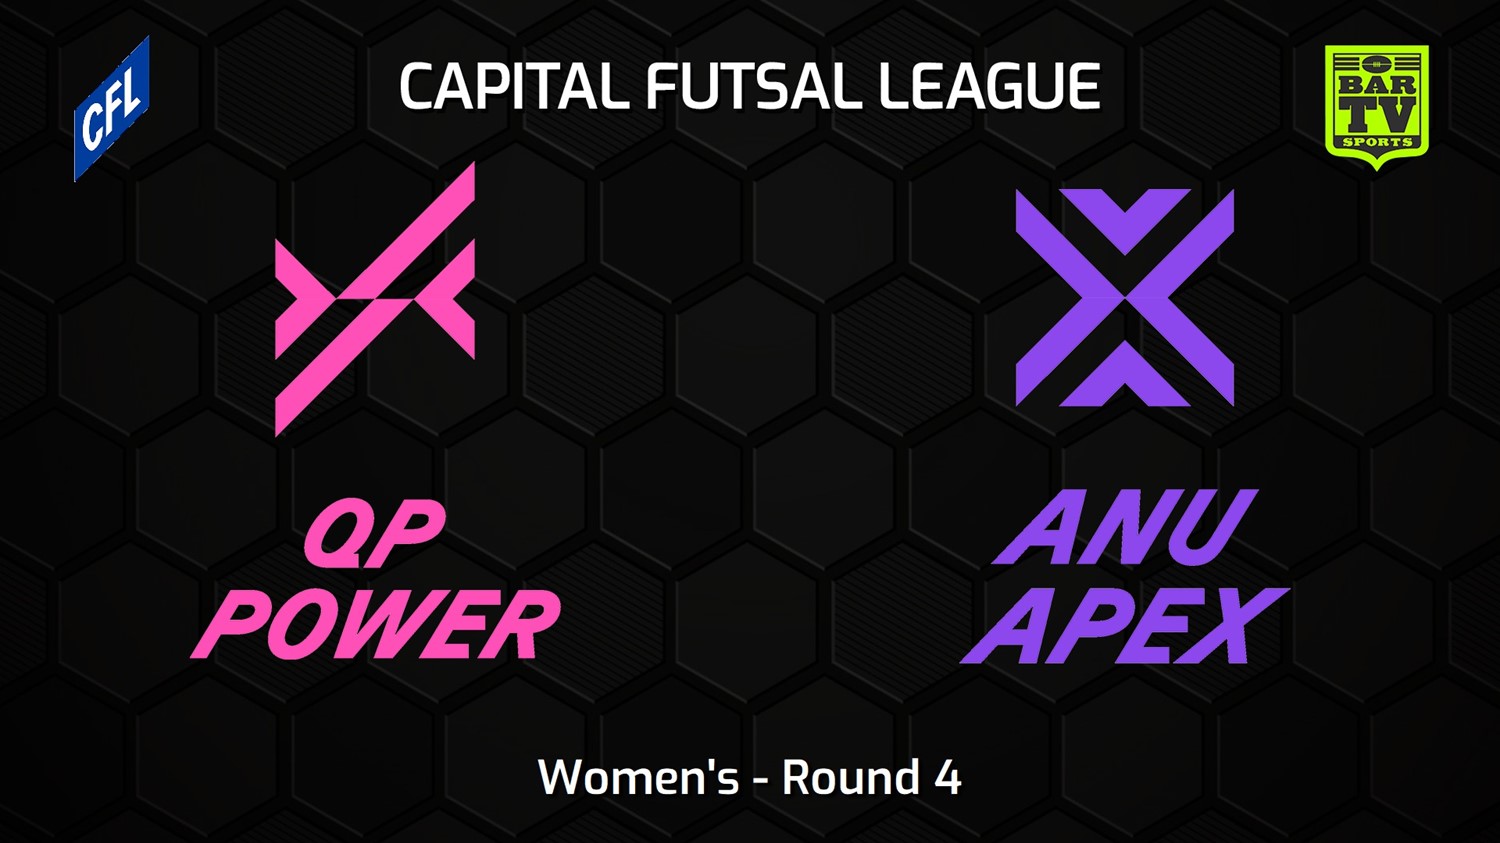 231111-Capital Football Futsal Round 4 - Women's - Queanbeyan-Palerang Power v ANU Apex Minigame Slate Image